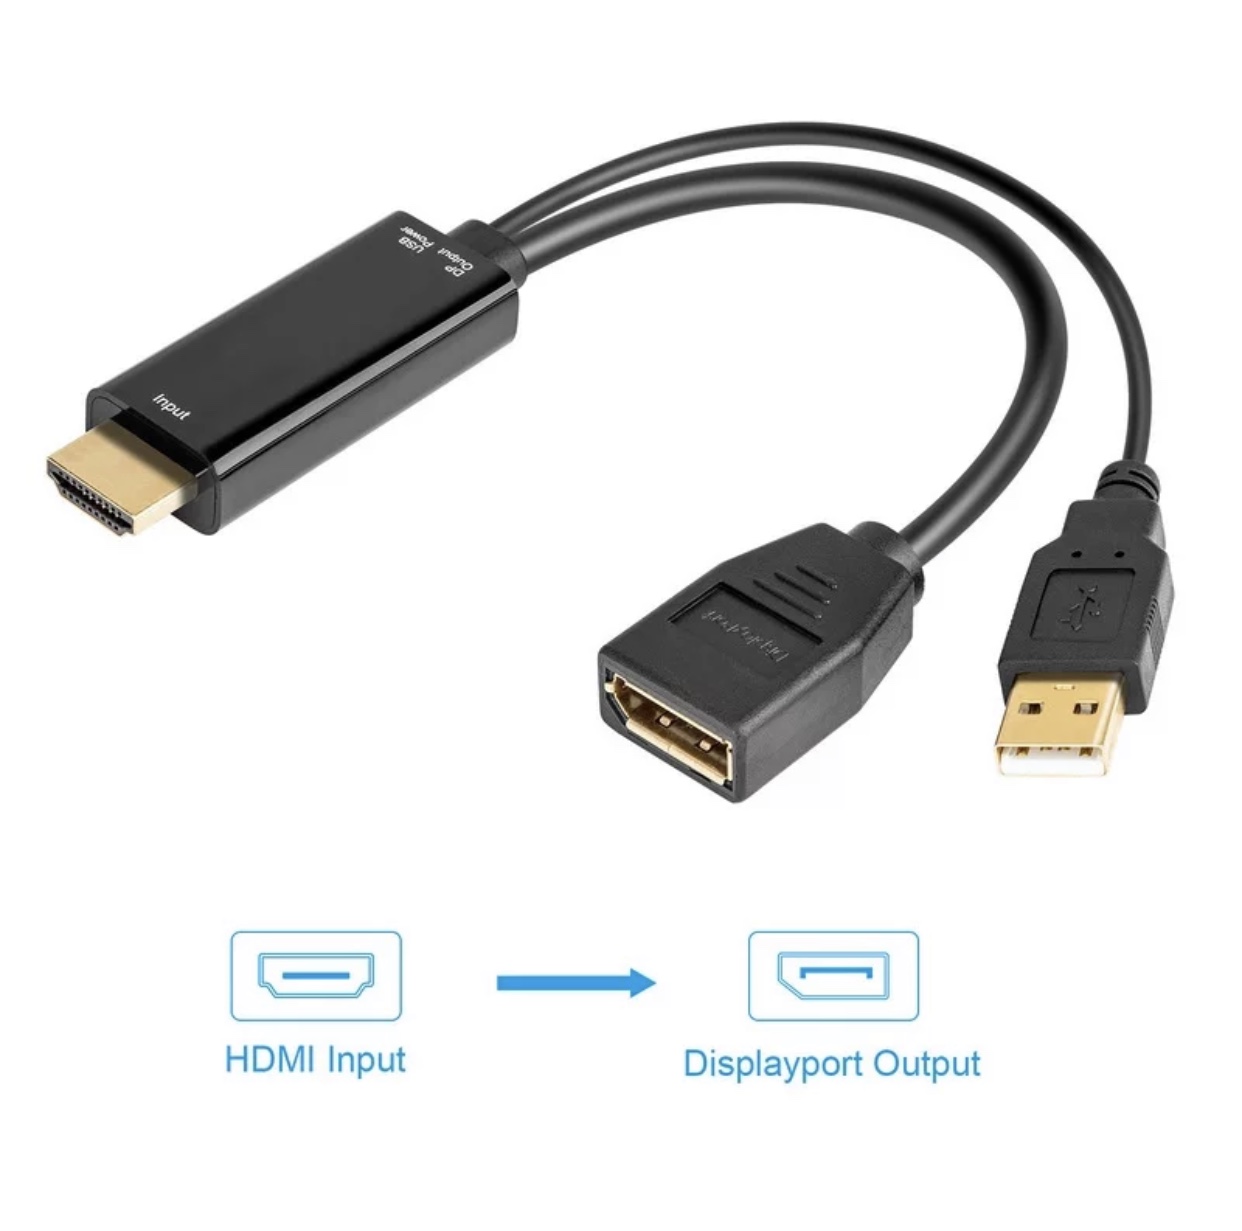  Septpenta Adaptador de cable AV, puerto HDmi para